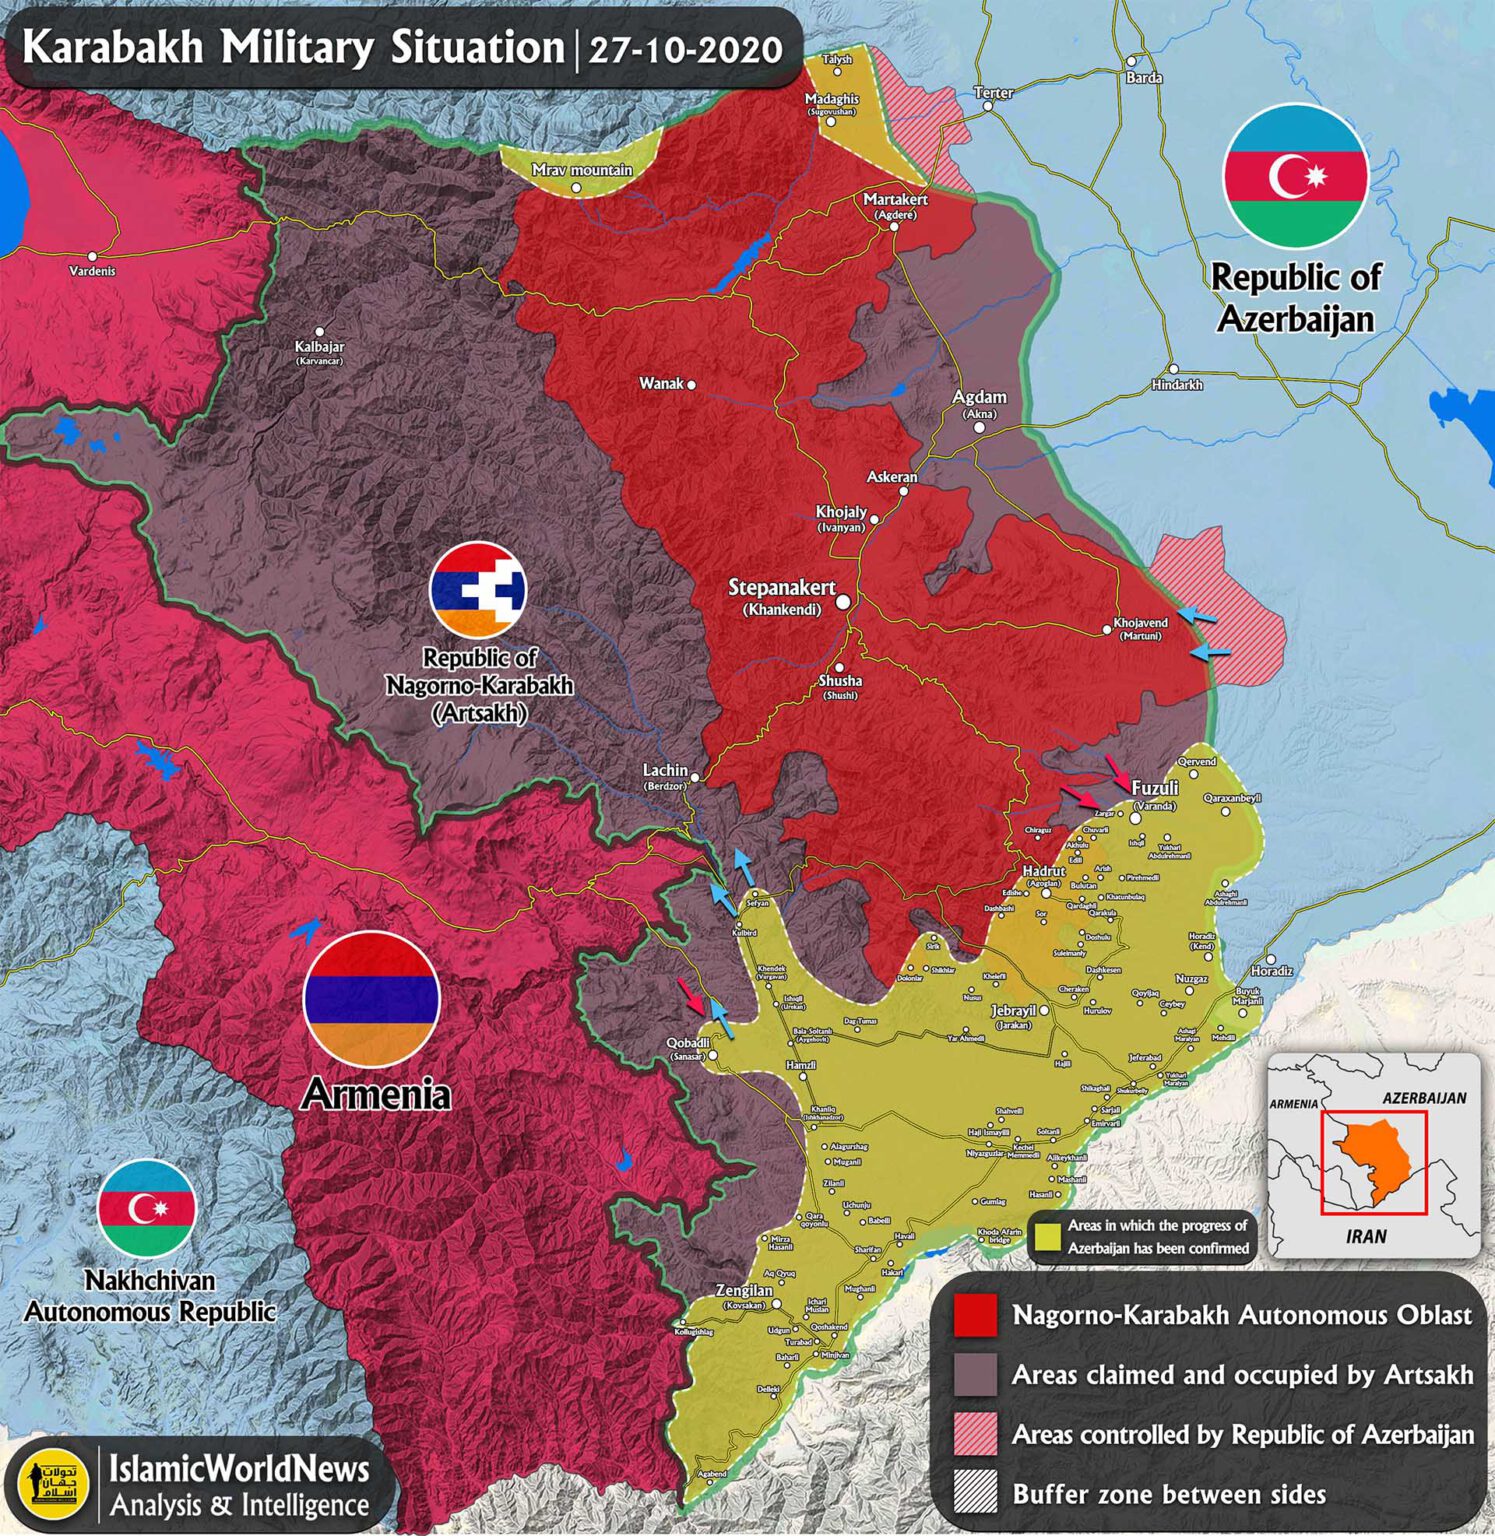 17-Karabakh-map-27oct20-6aba99-en-copy-1495x1536.jpg